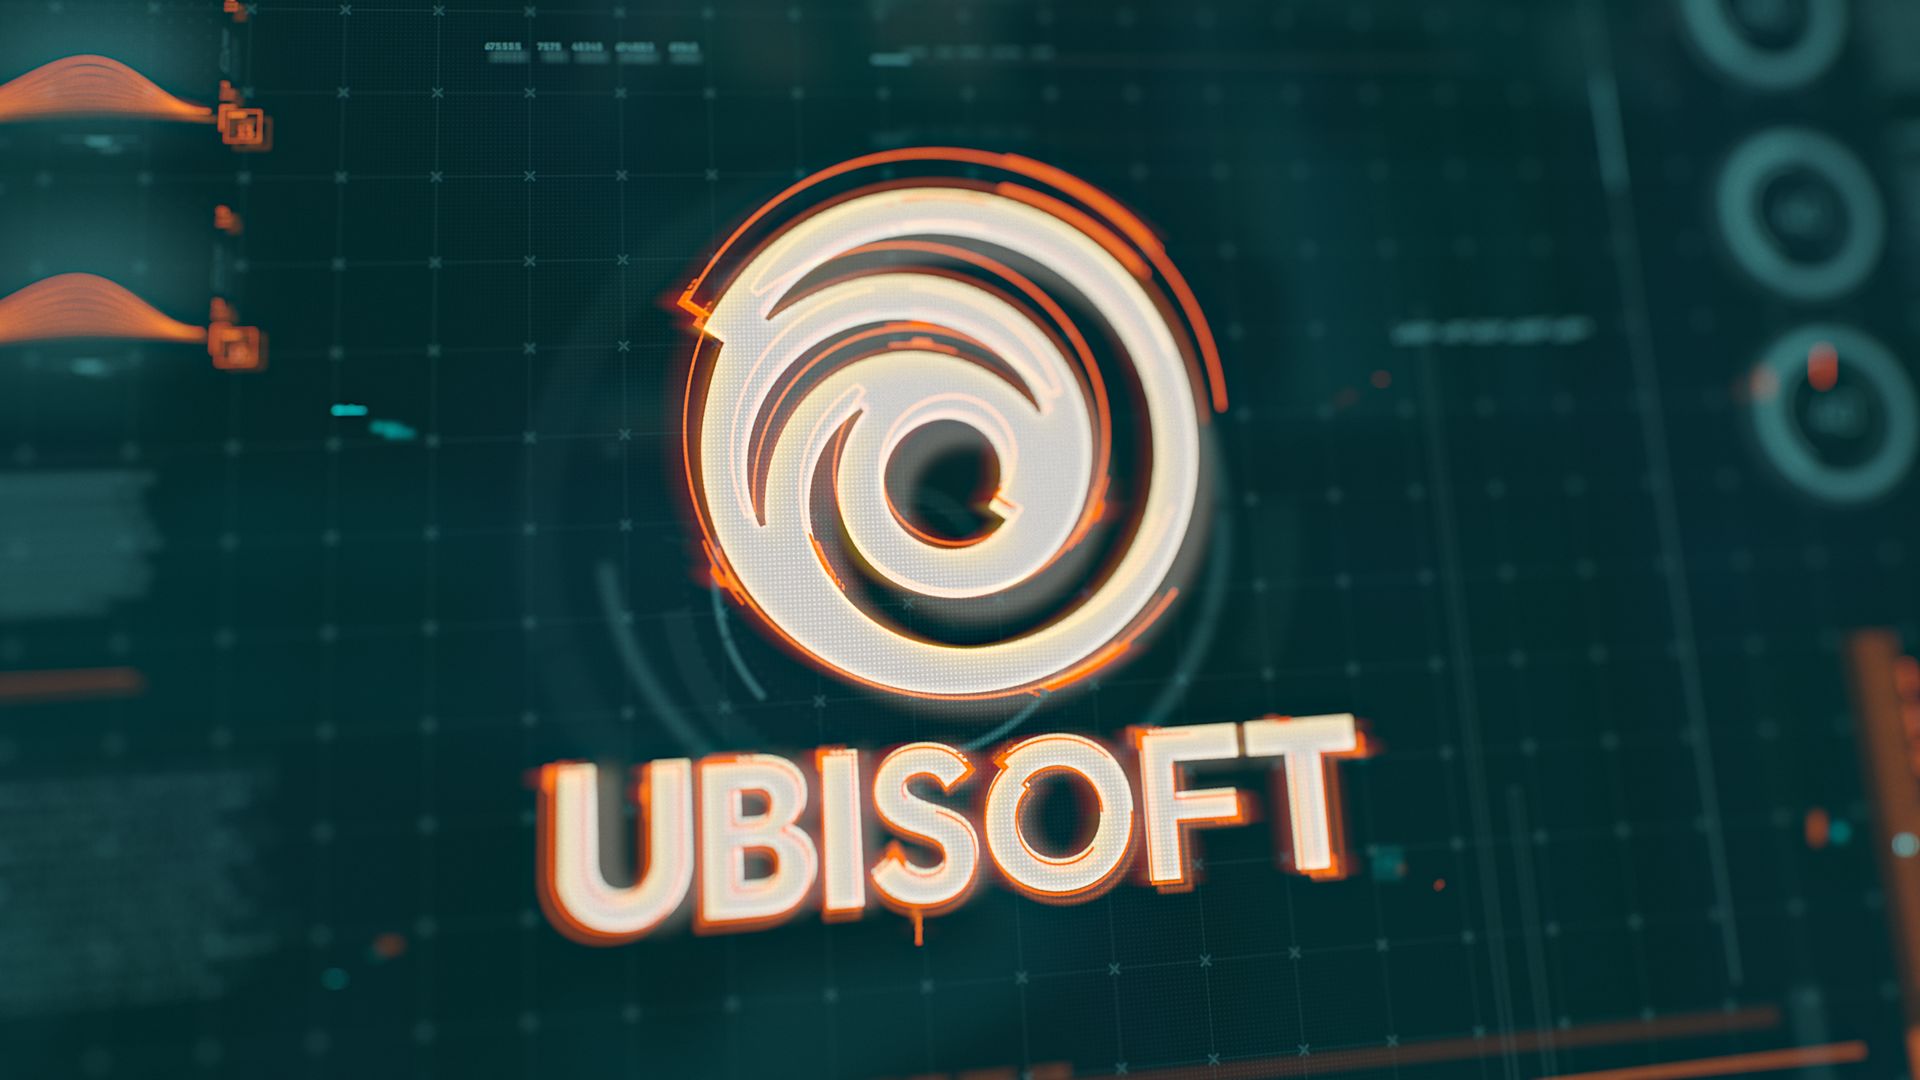 Ubisoft logo in FUI style forHyper Scape Logo Animation 04